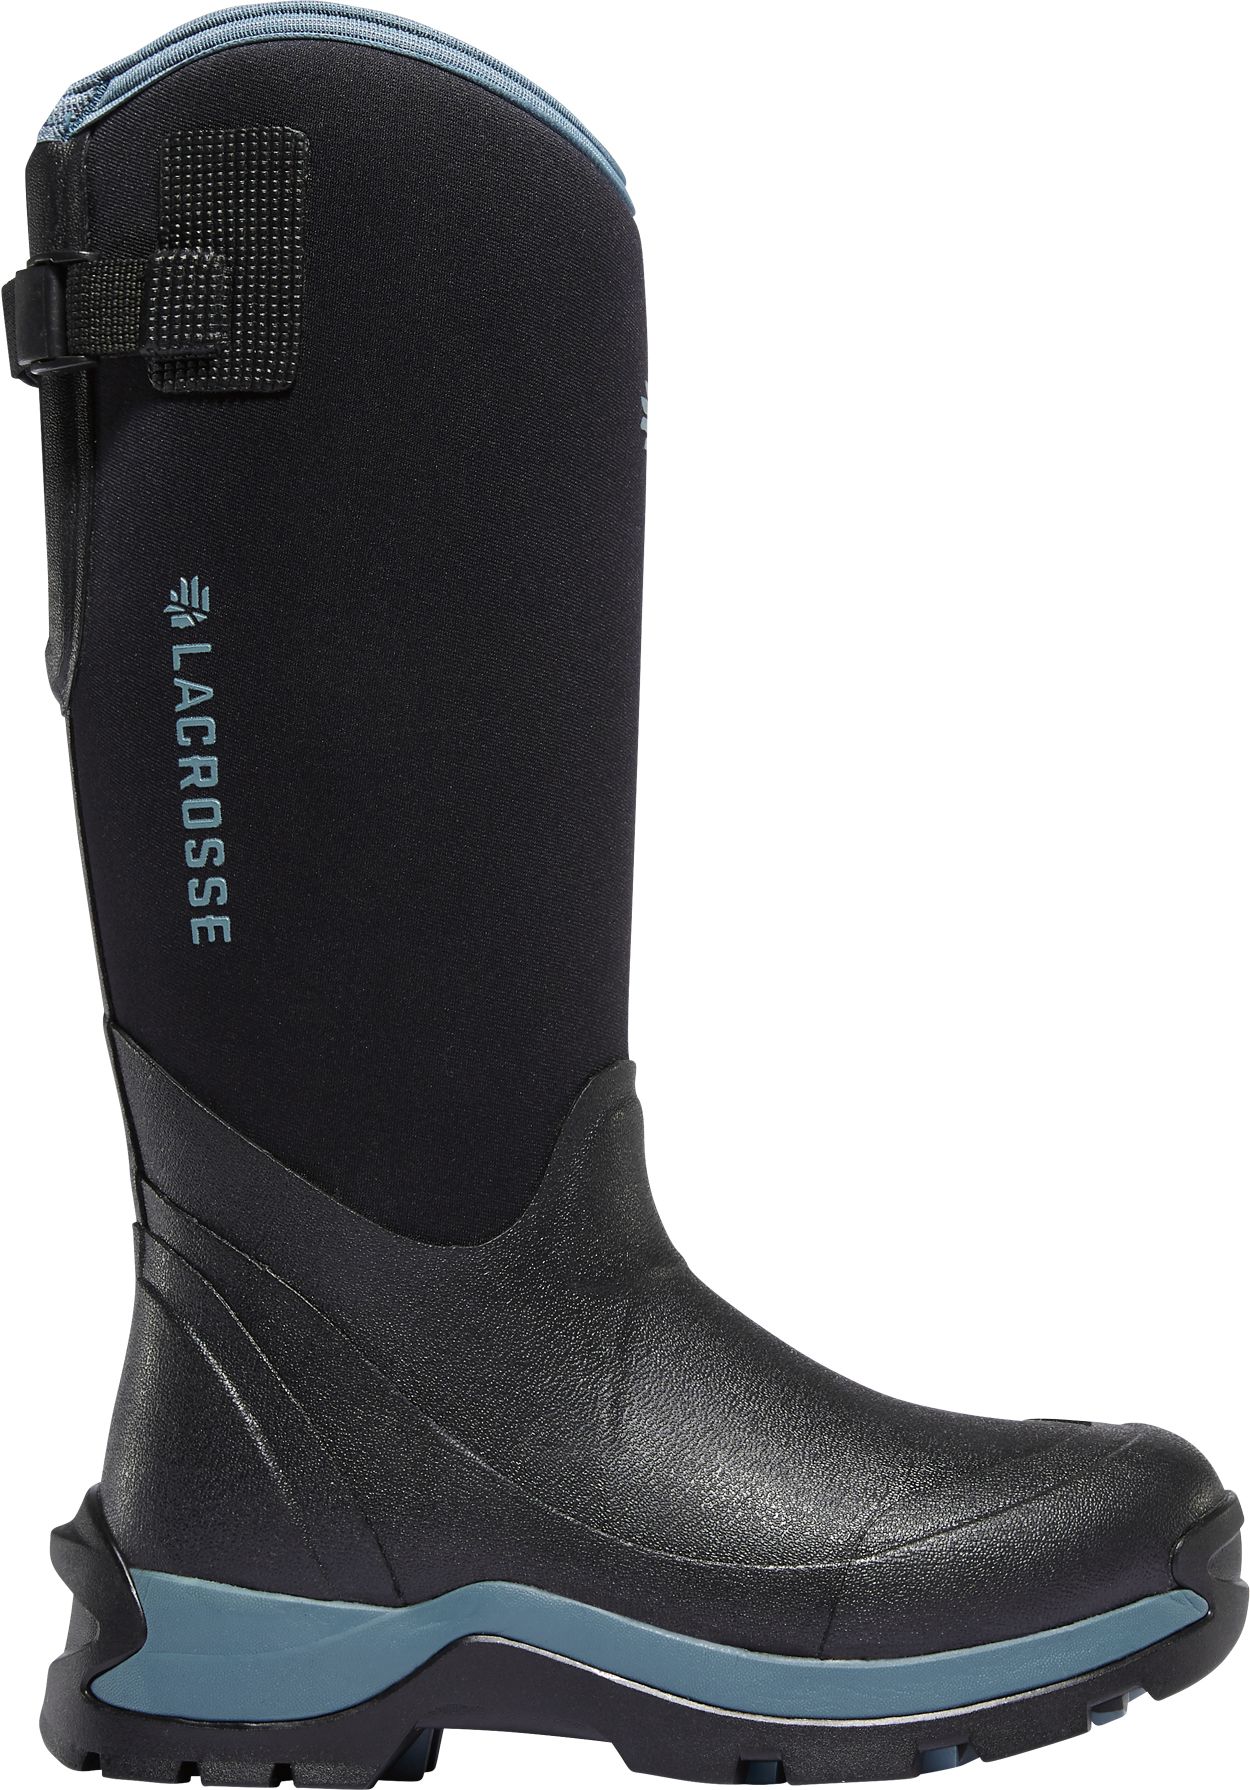 women's insulated rain boots